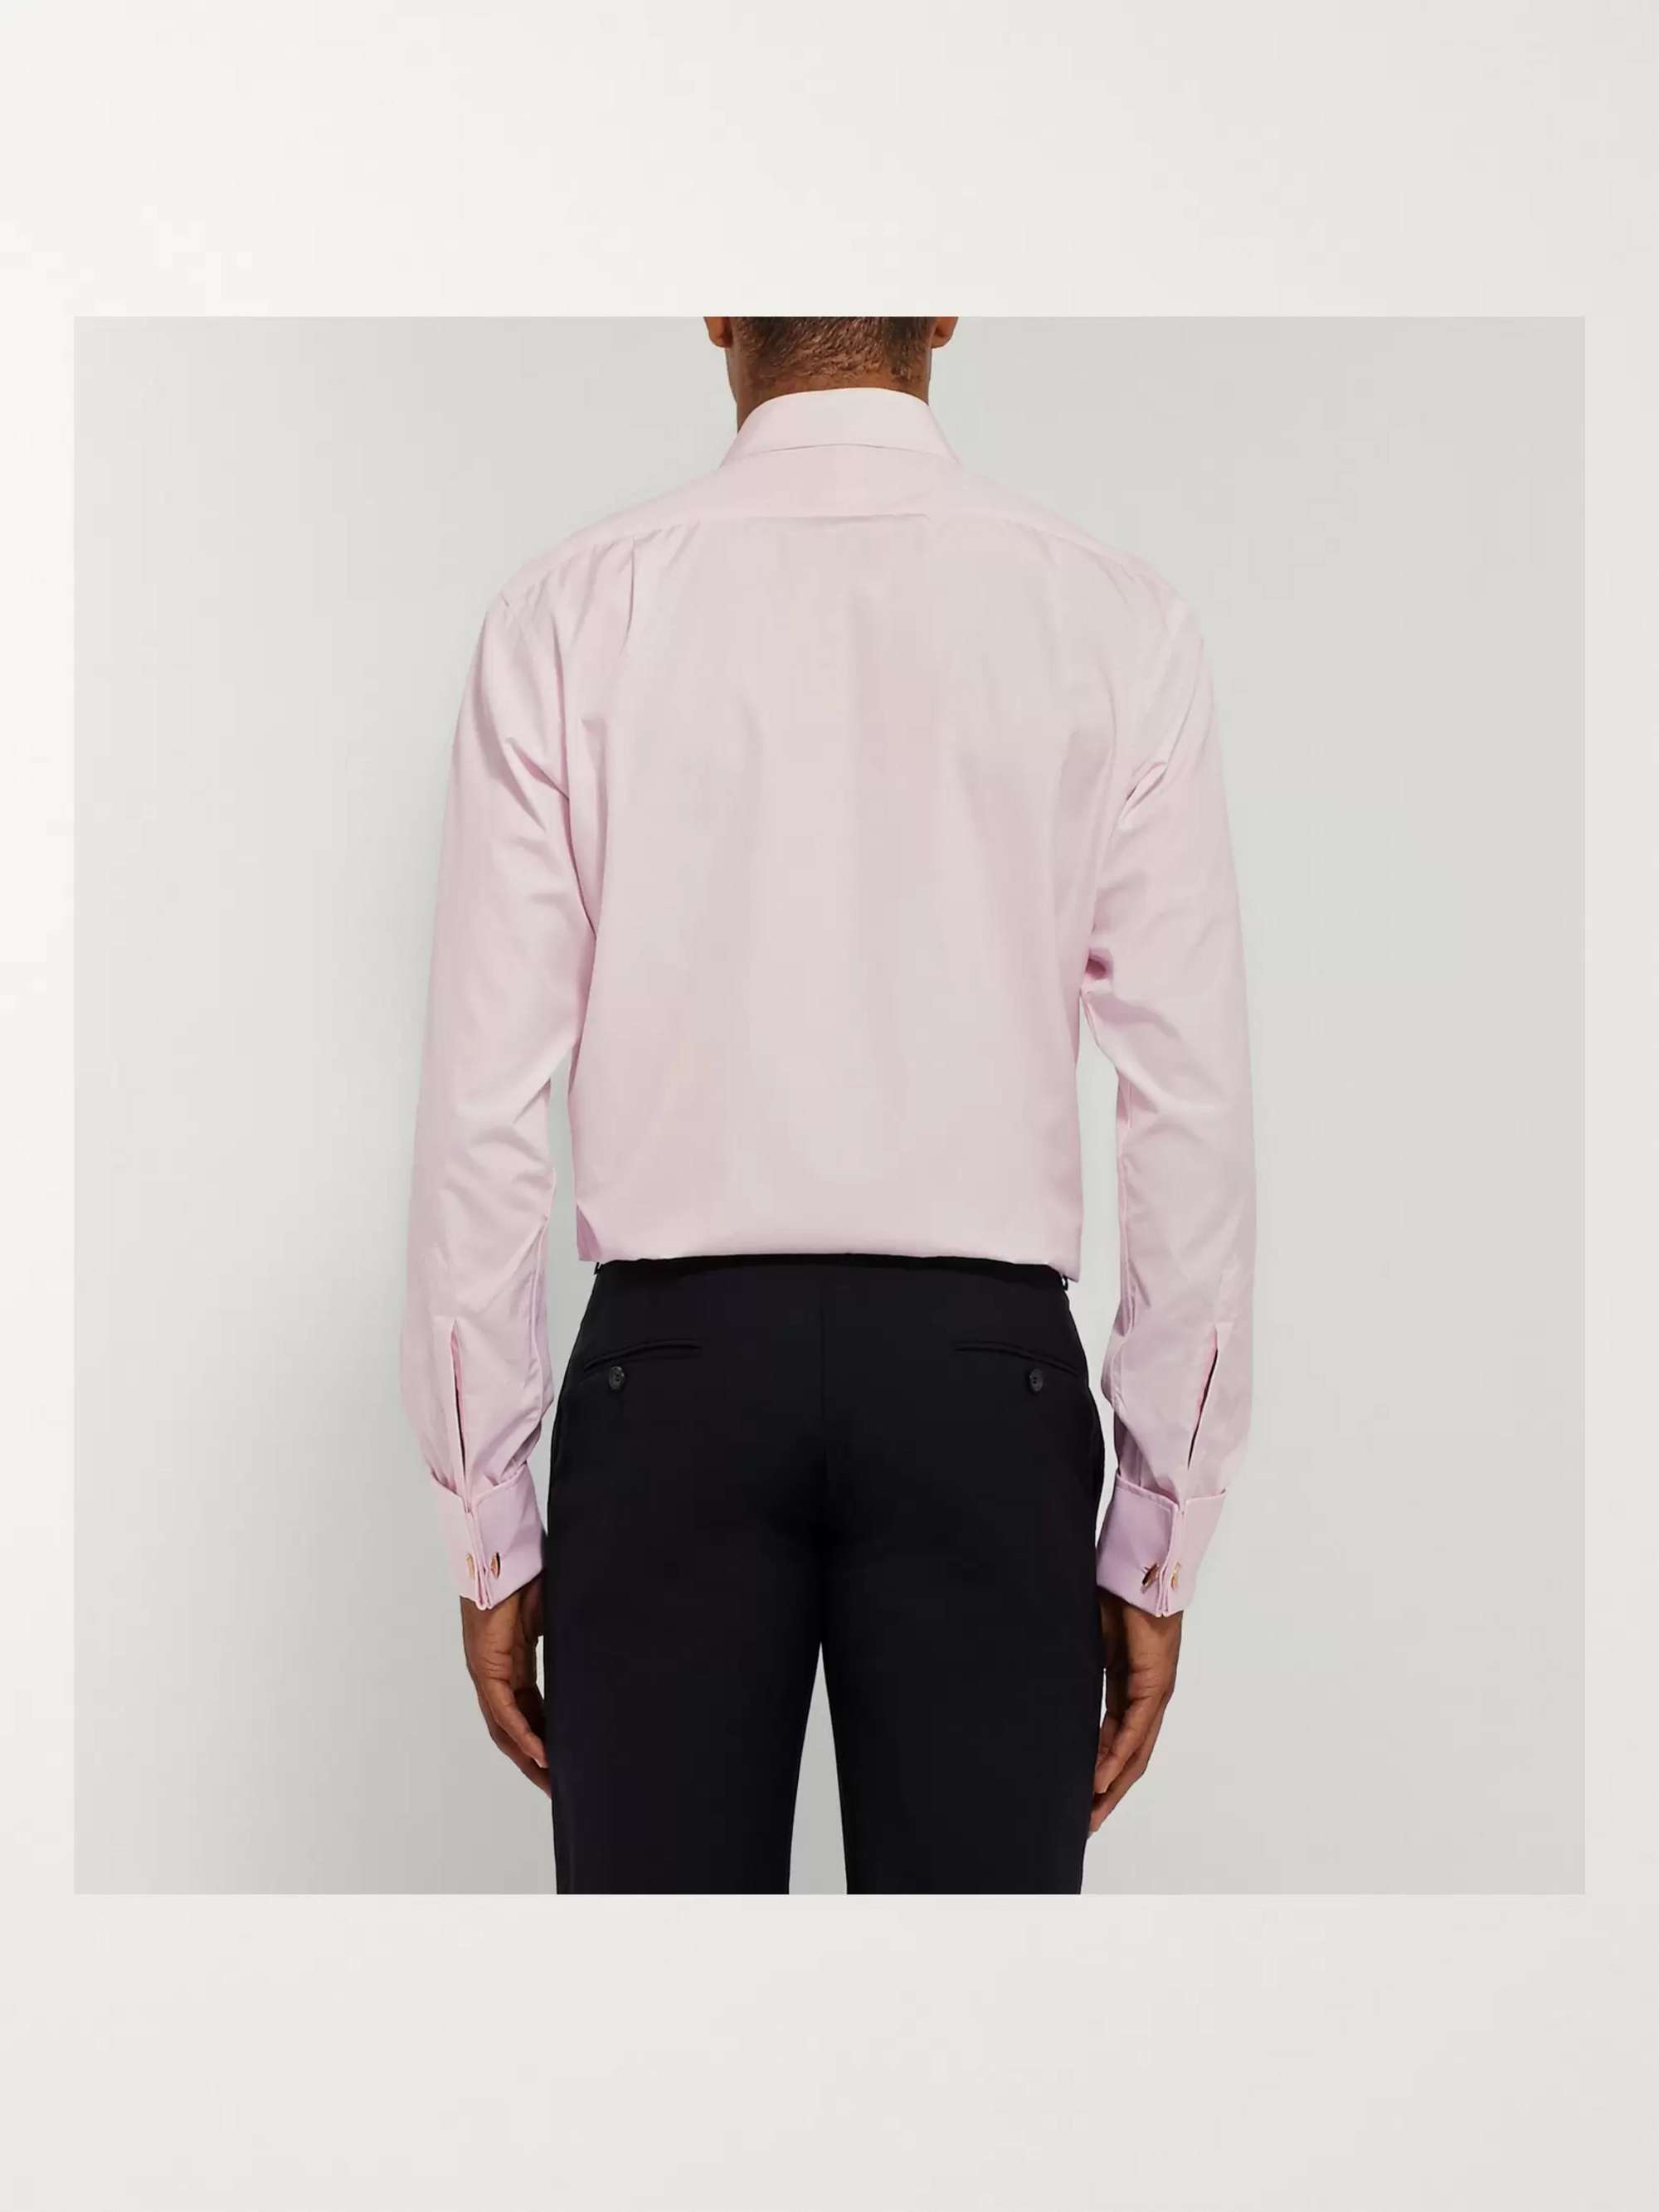 TURNBULL & ASSER Pink Double-Cuff Cotton Shirt